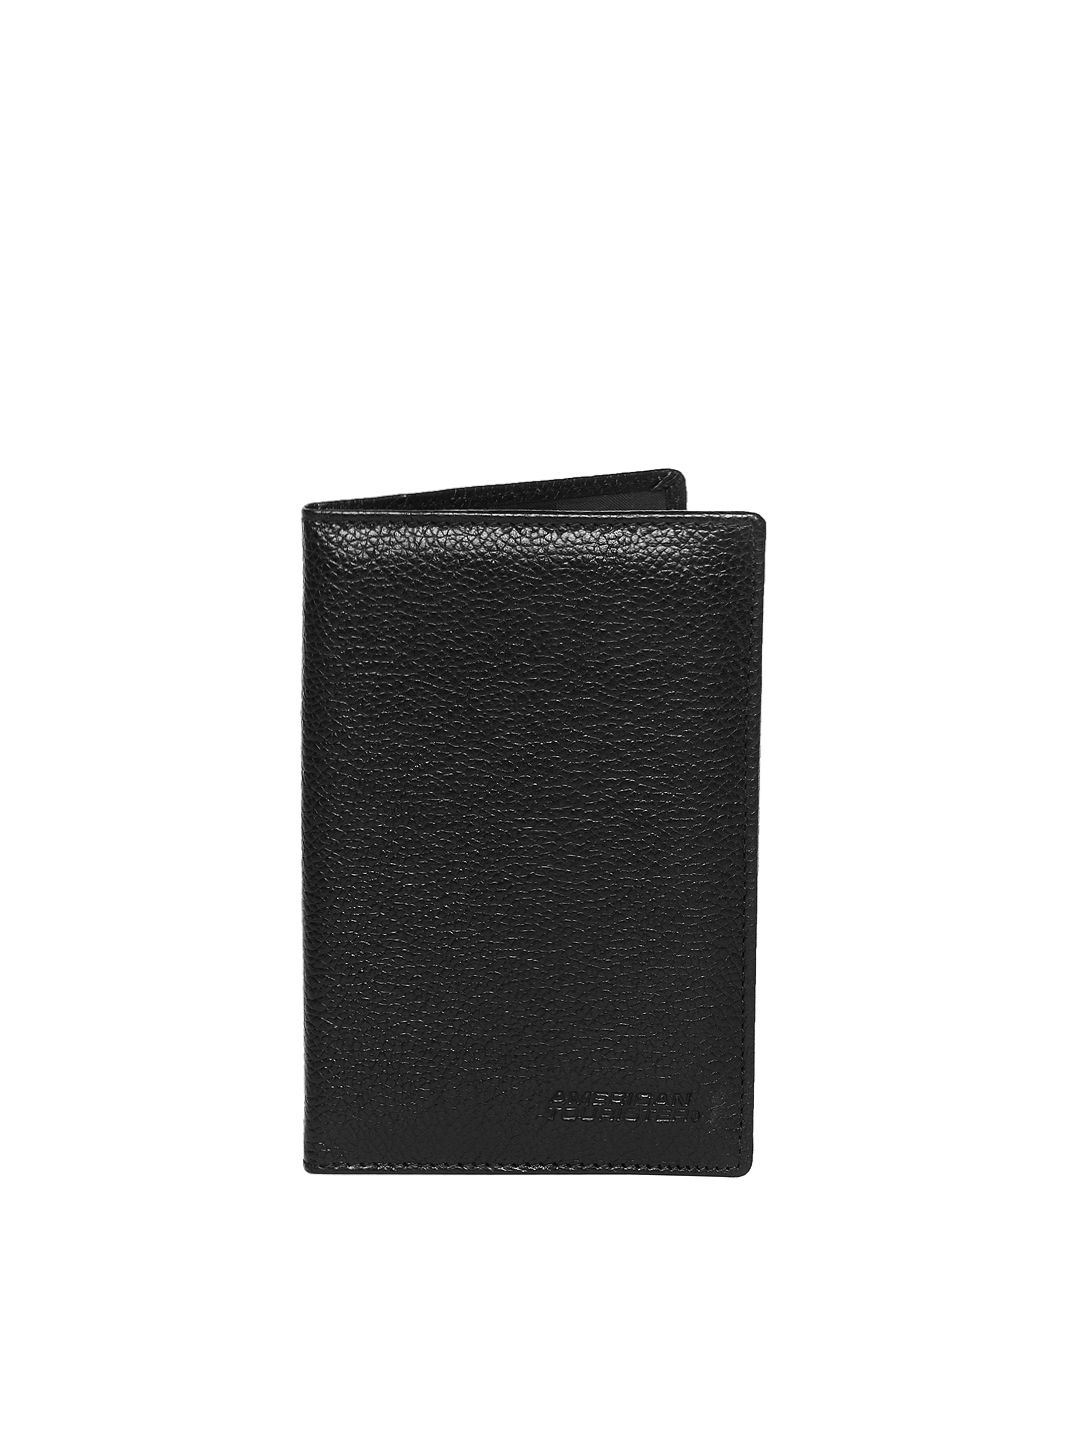 Buy American Tourister Black Passport Holder - Accessories for Unisex